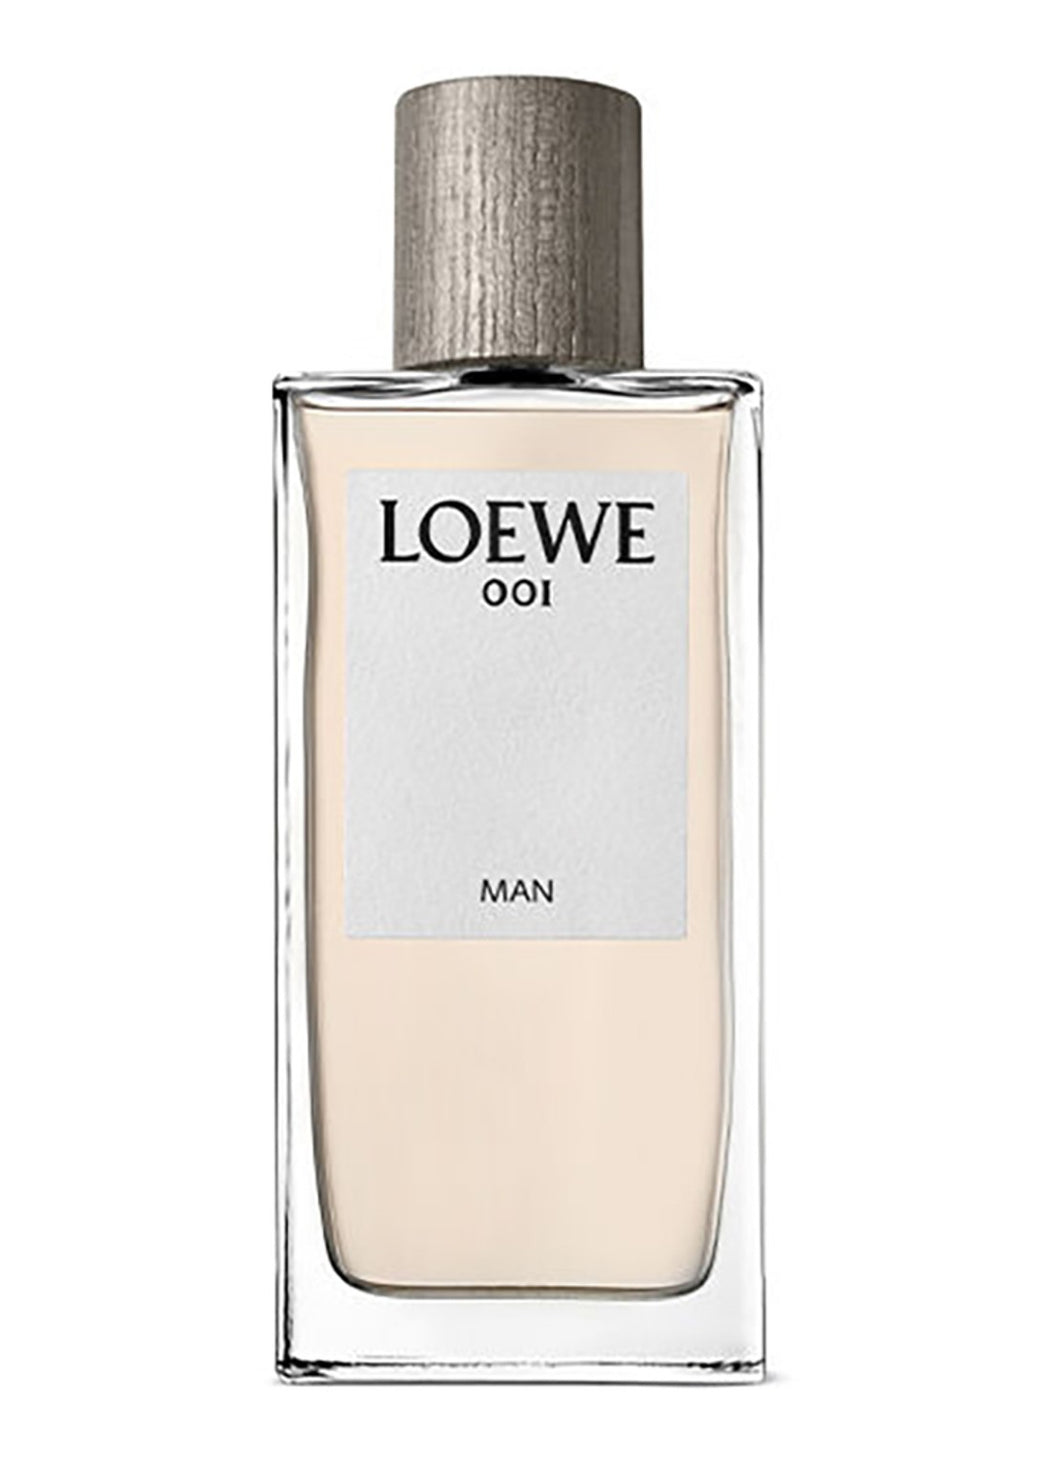 LOEWE - 001 Men